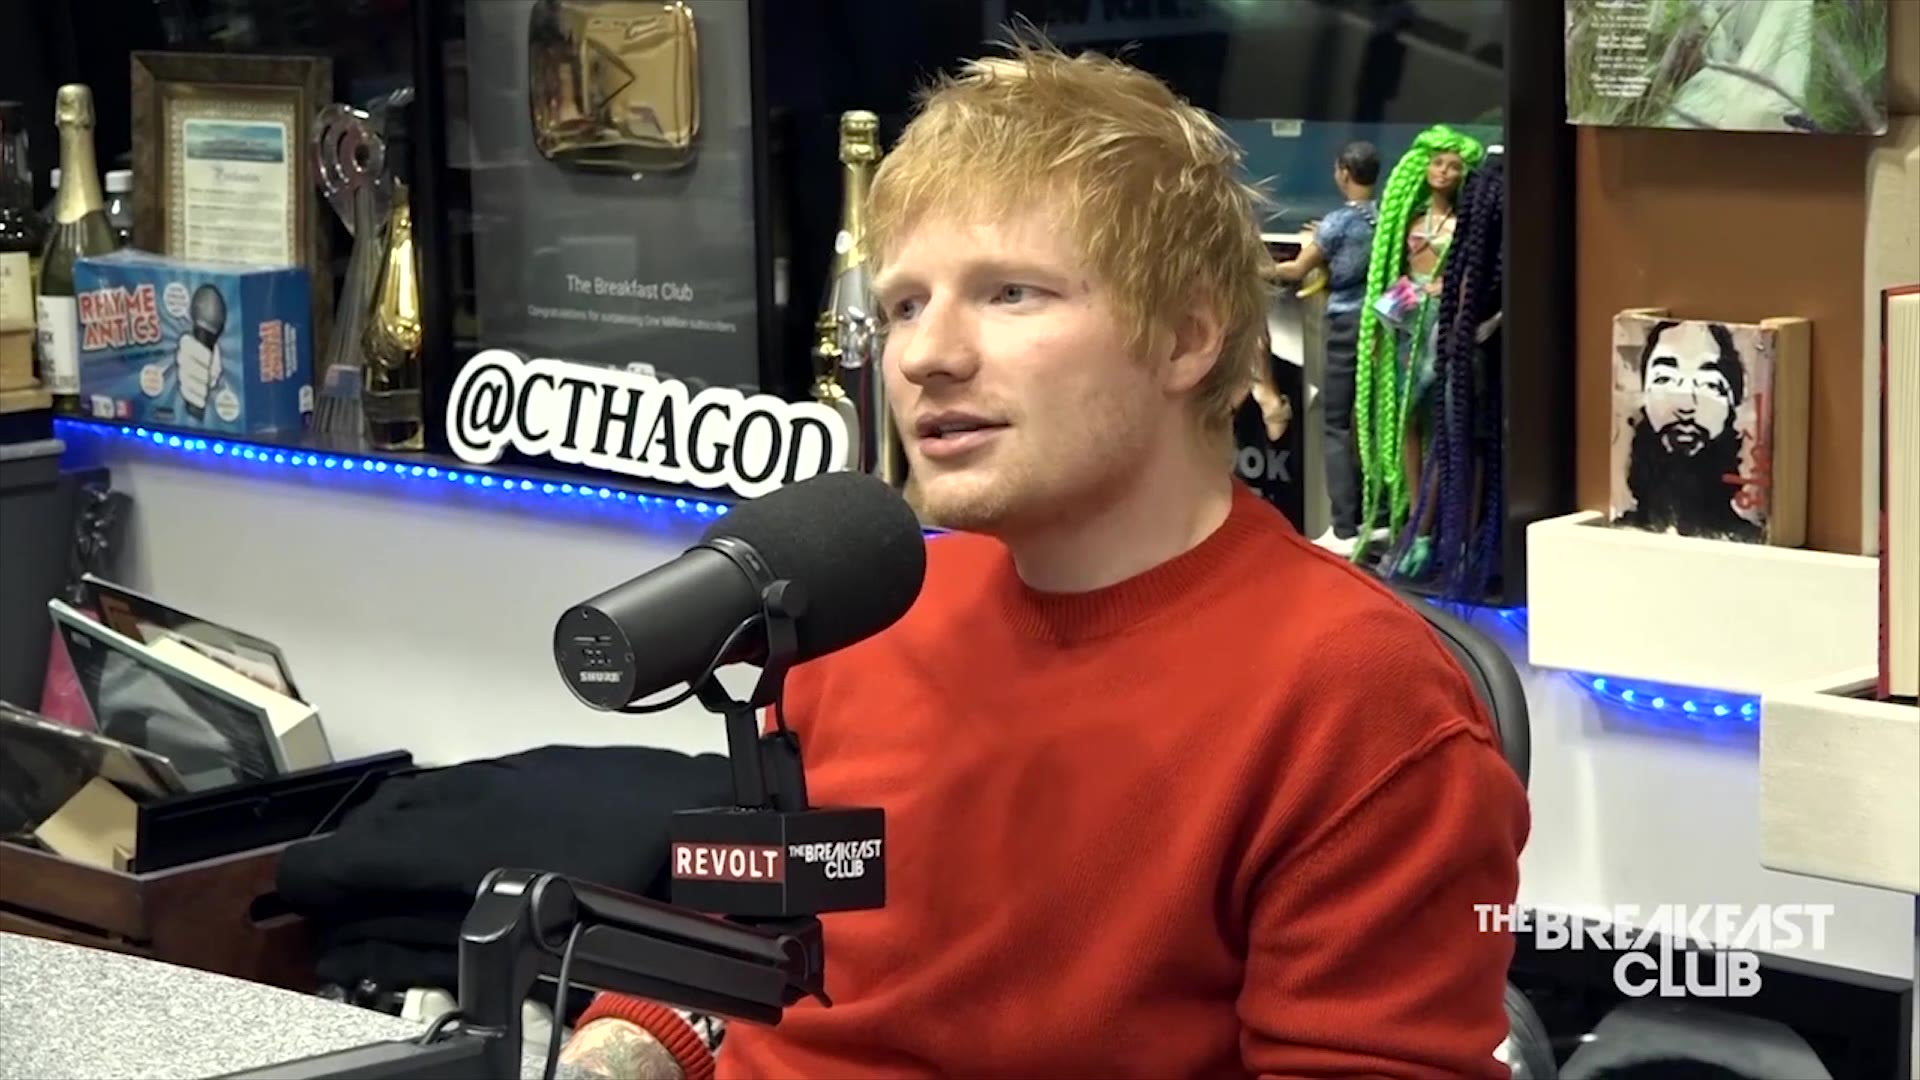 Sheeran red notice ed Netflix Calls